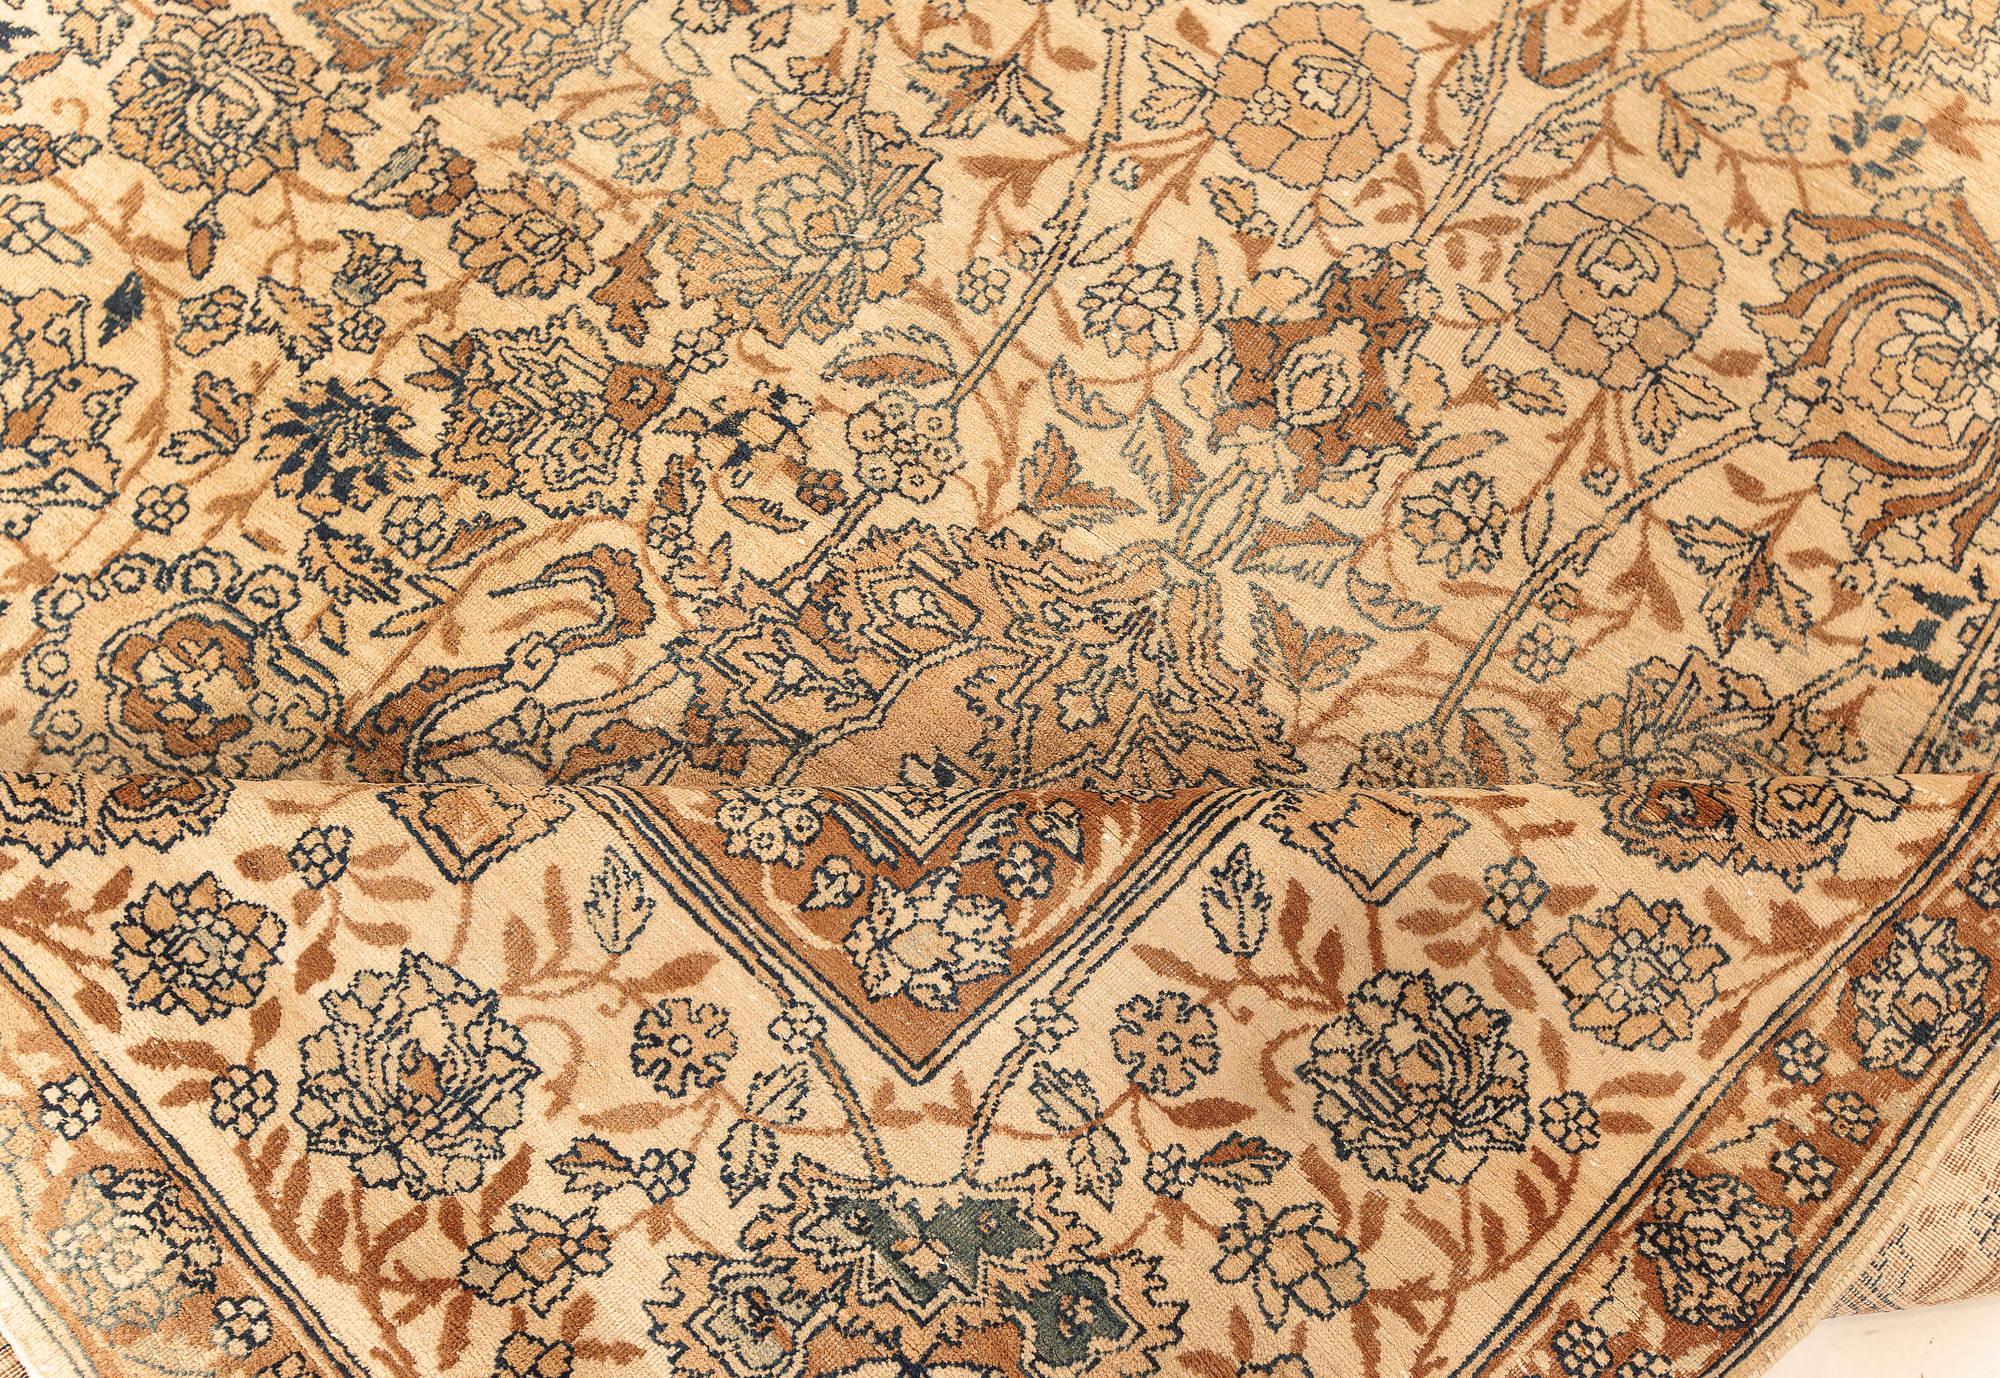 Antique Persian Kirman Beige, Blue, Brown Handmade Wool Rug 'Size Adjusted'
Size: 10'9